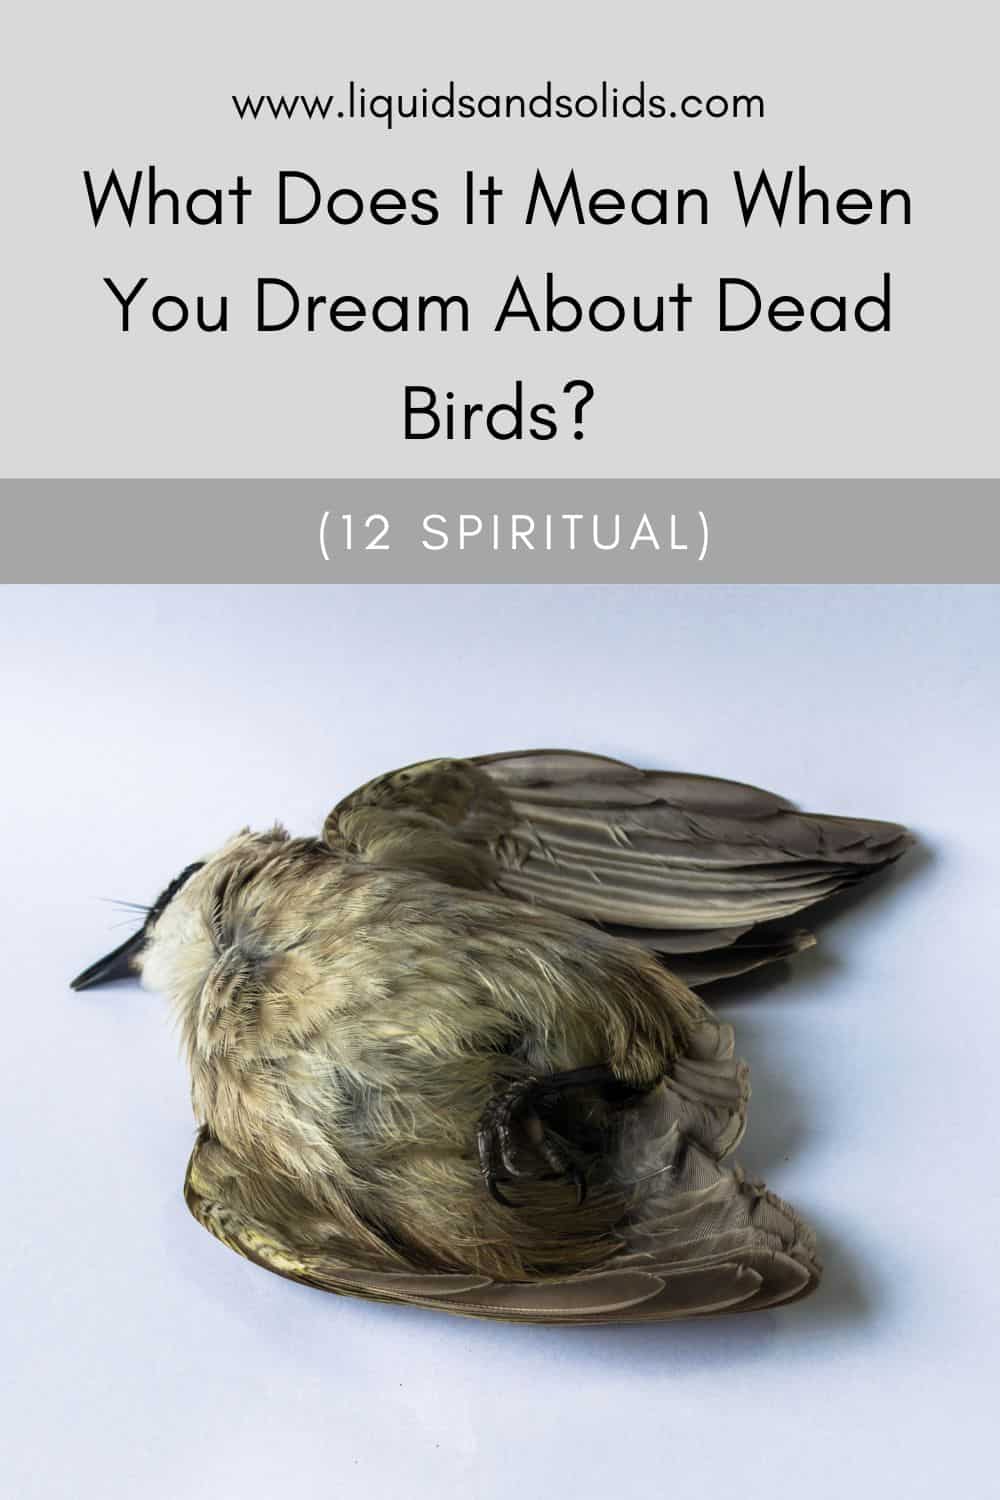  Drøm om døde fugle (12 spirituelle betydninger)